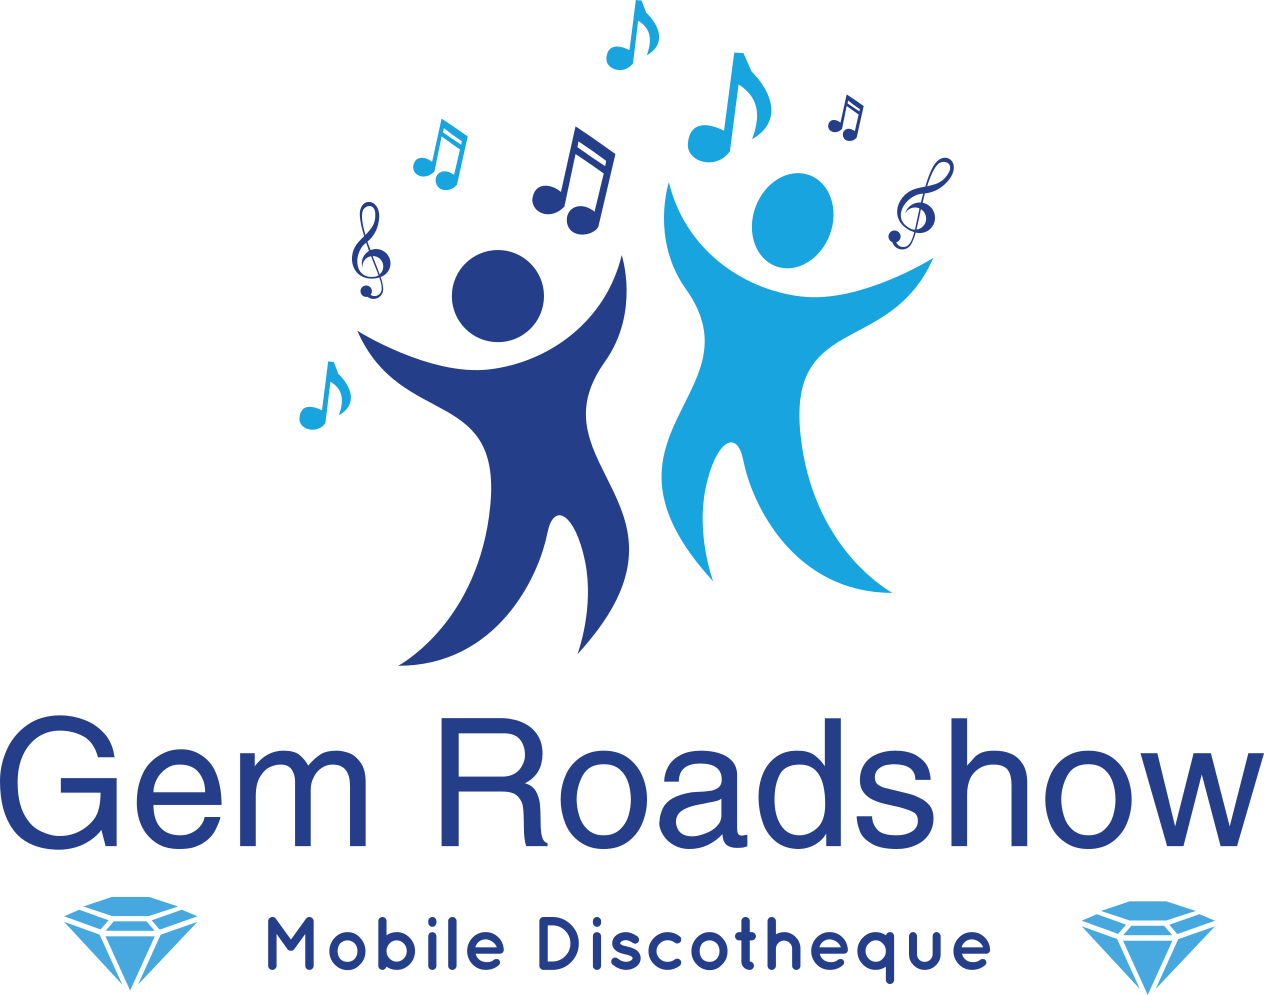 gem roadshow logo